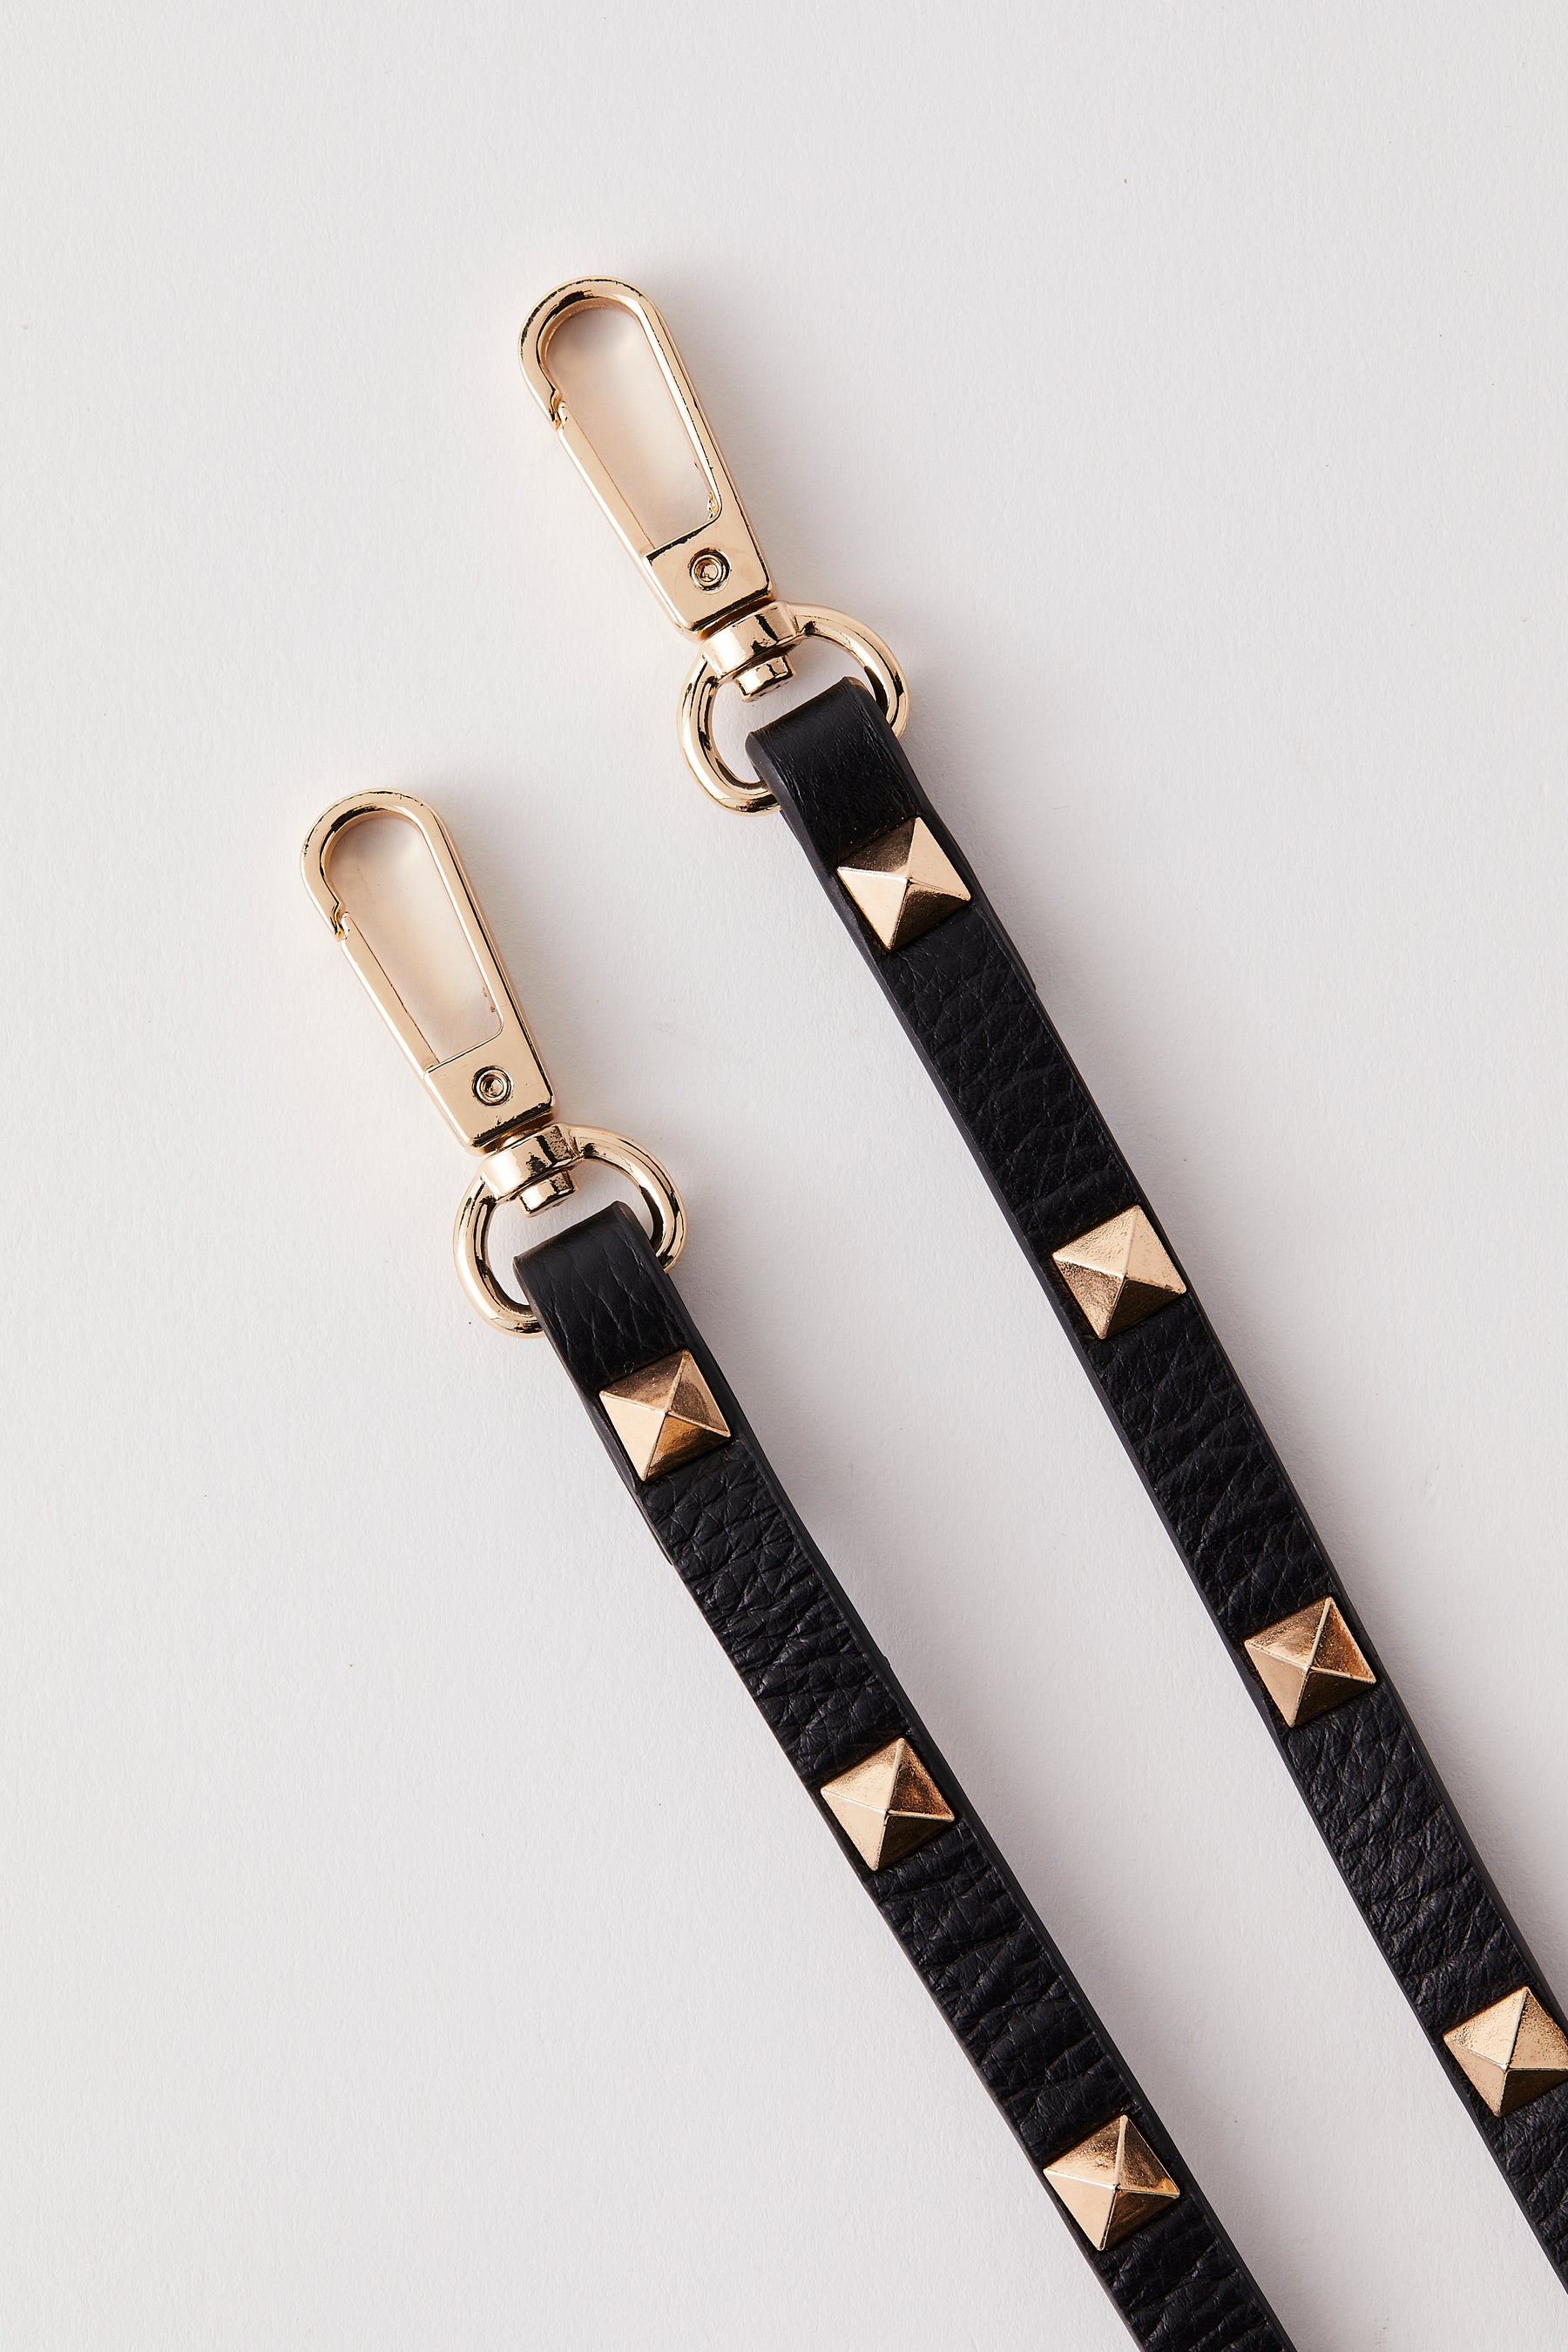 Studded Leather Strap | Black Gold